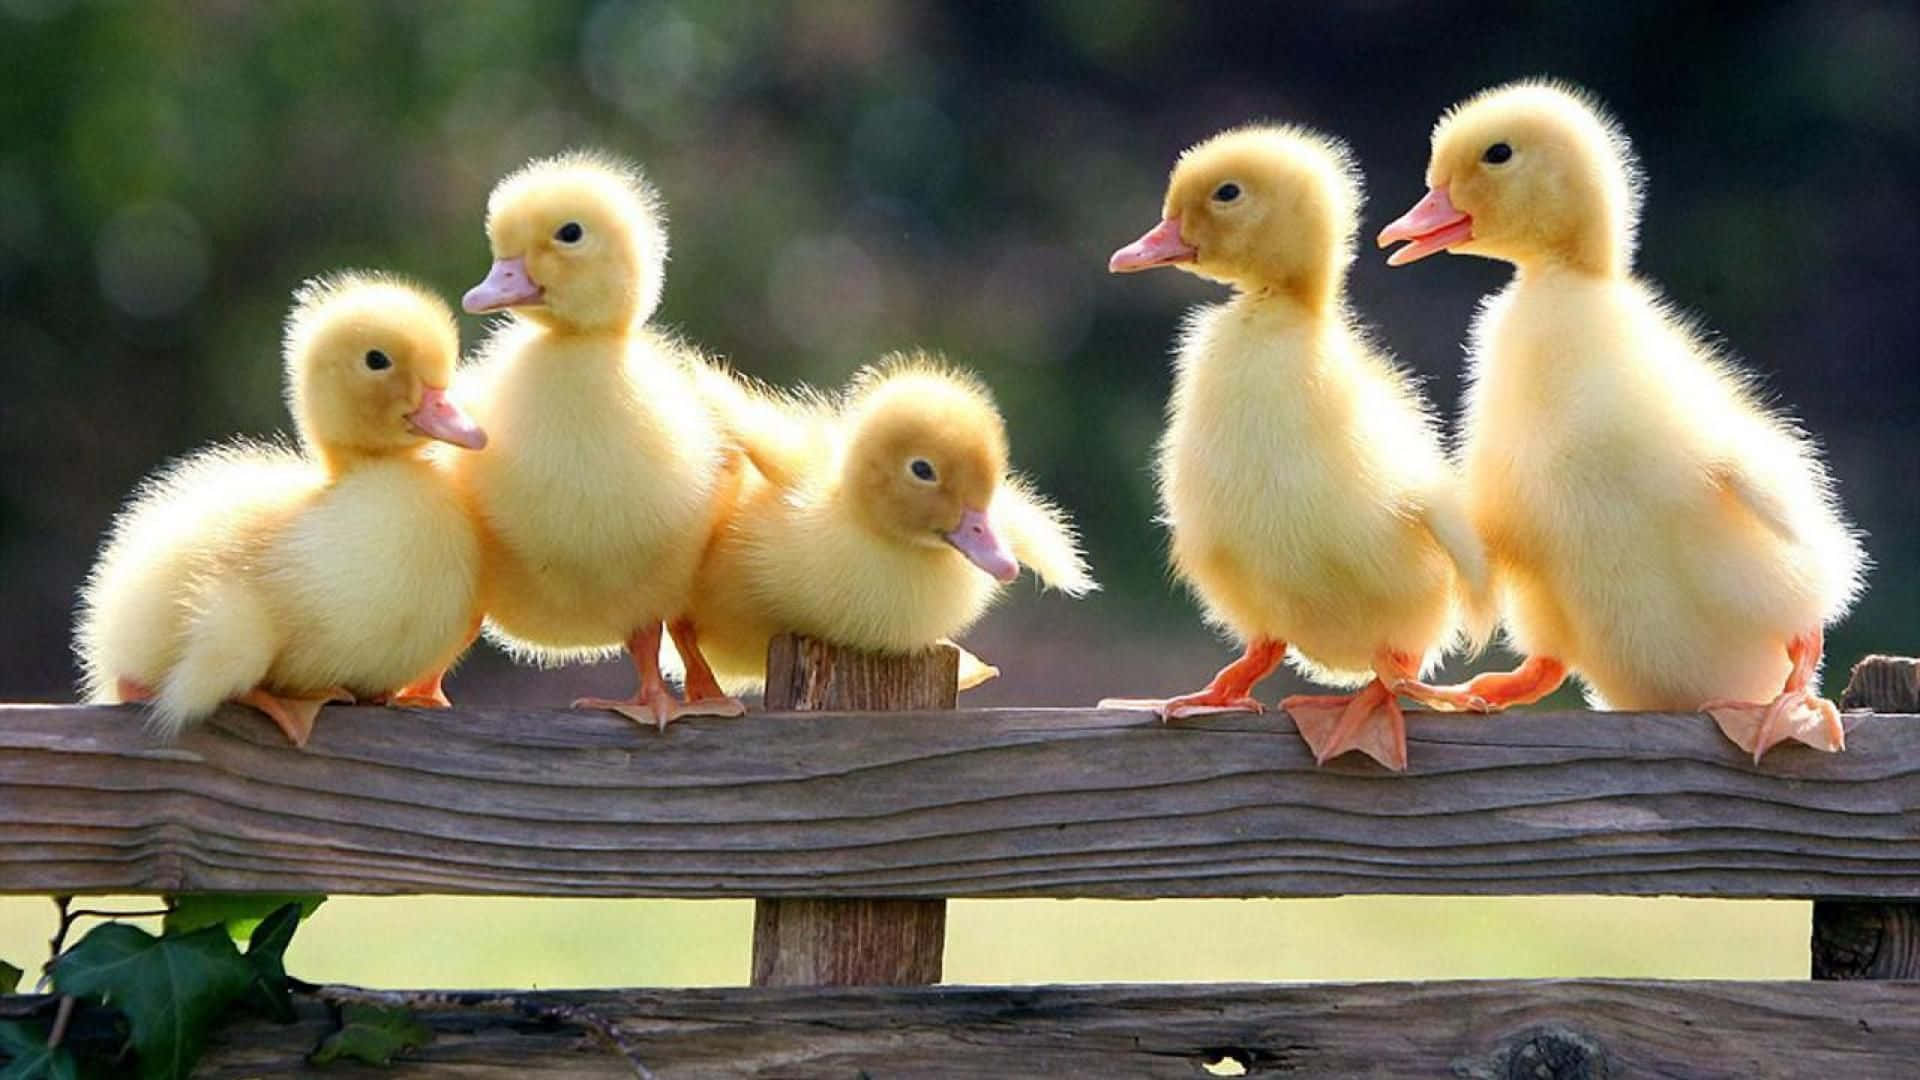 Cute Animal Farm Ducklings Picture